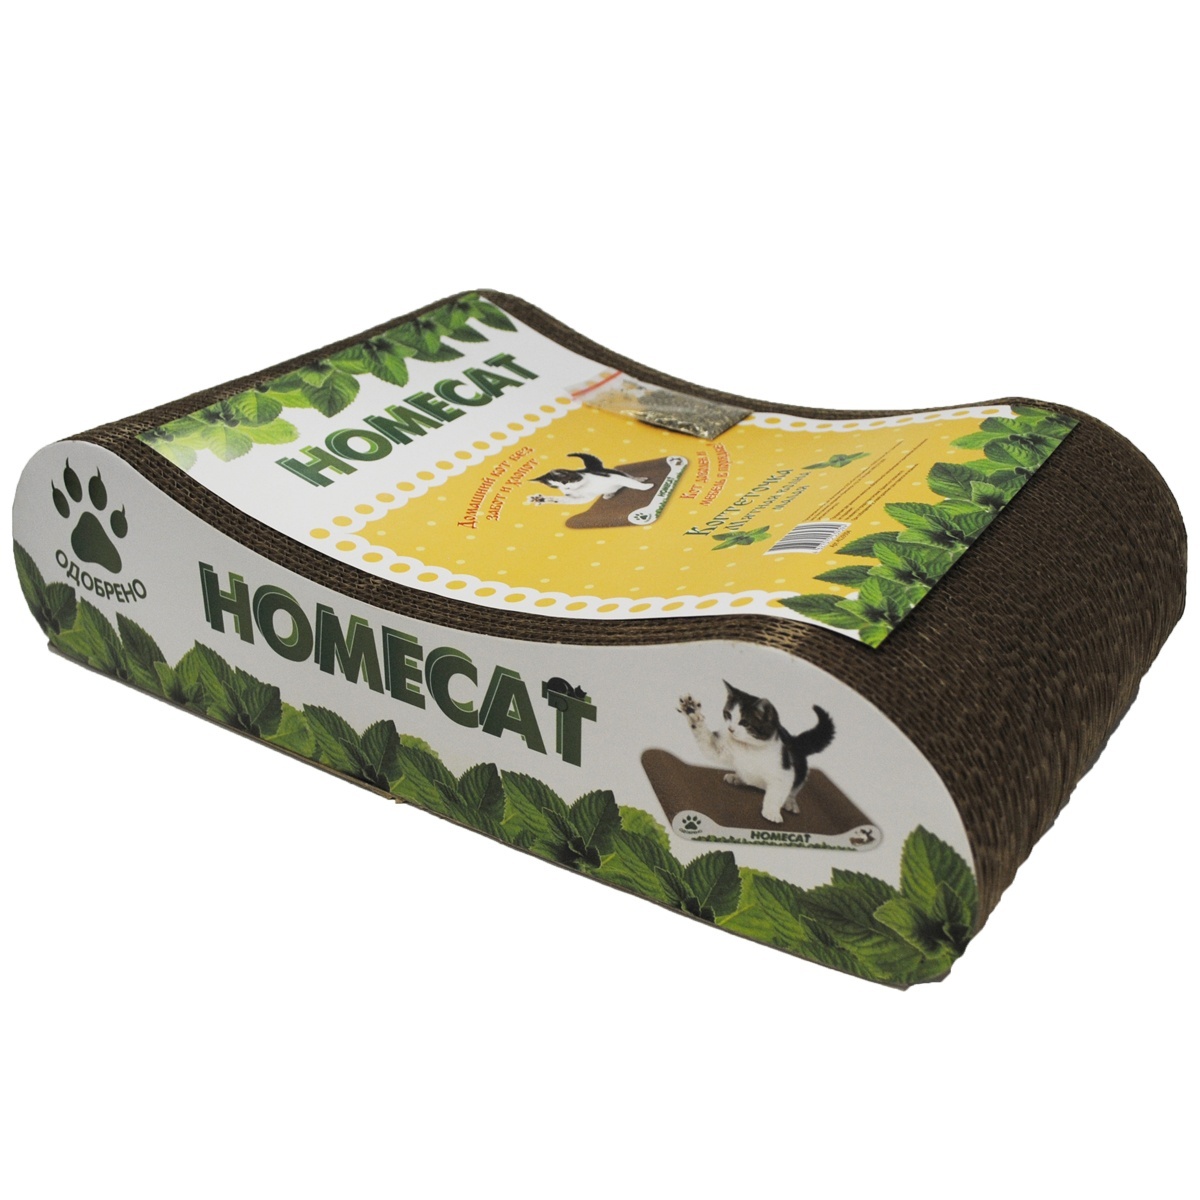 Homecat Homecat когтеточкаМятная волна, гофрокартон, 41х24х10 см (500 г) homecat homecat когтеточка мятная волна гофрокартон 38 12 9 см 500 г